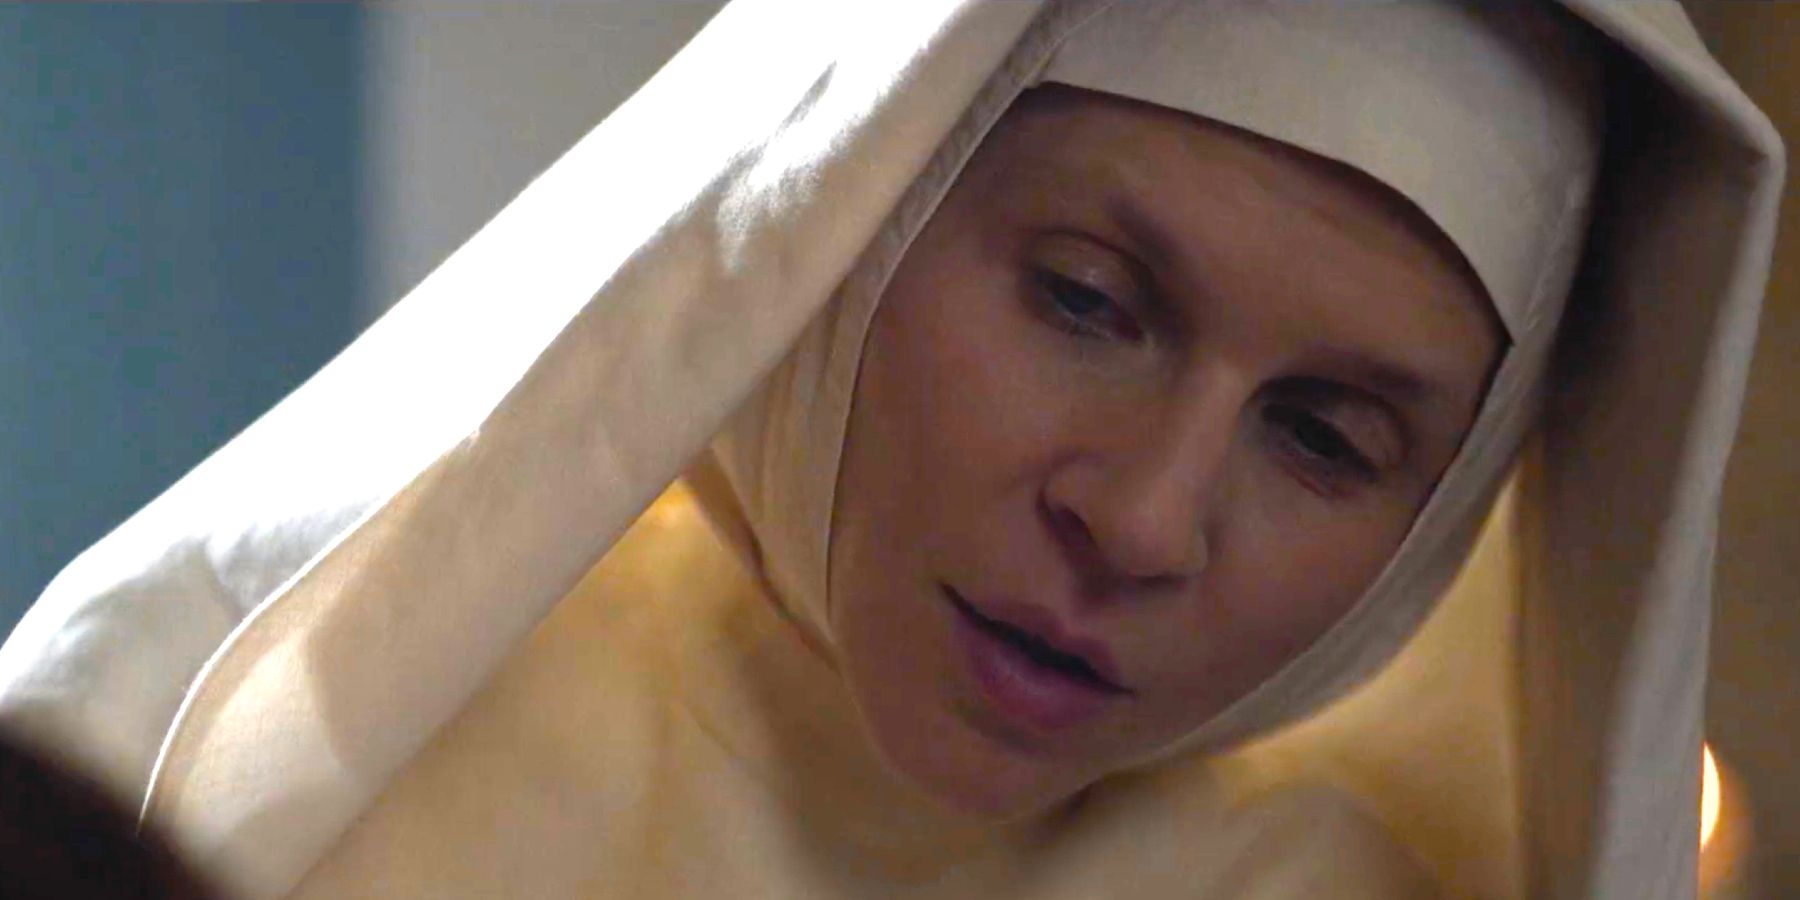 “Killer Nuns, Huh?”: detalles de la historia de Daryl Dixon revelados en un nuevo video de Walking Dead Newcomer